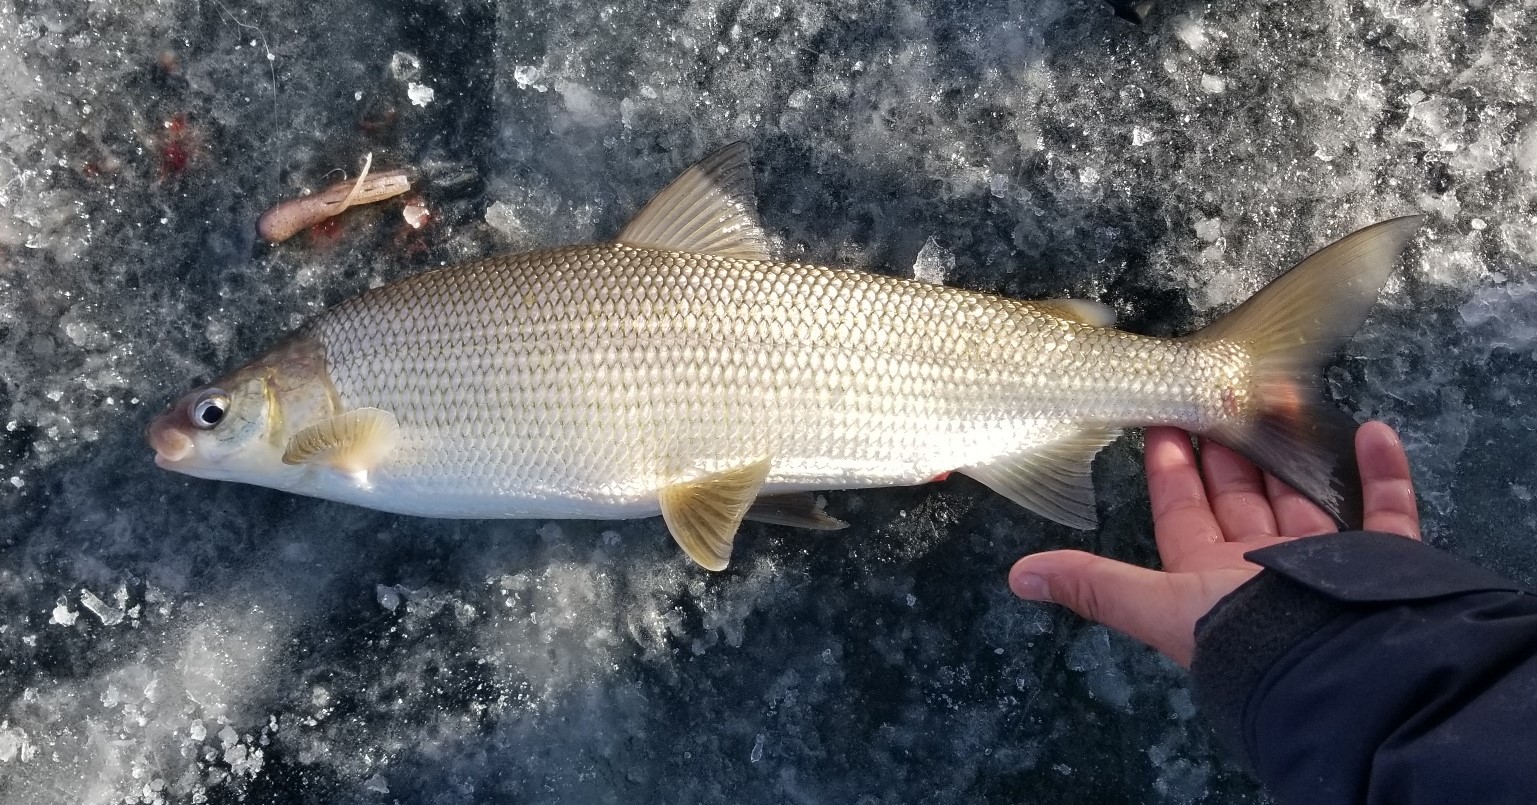 Using Genomics Techniques to Delineate Lake Michigan Whitefish Stocks